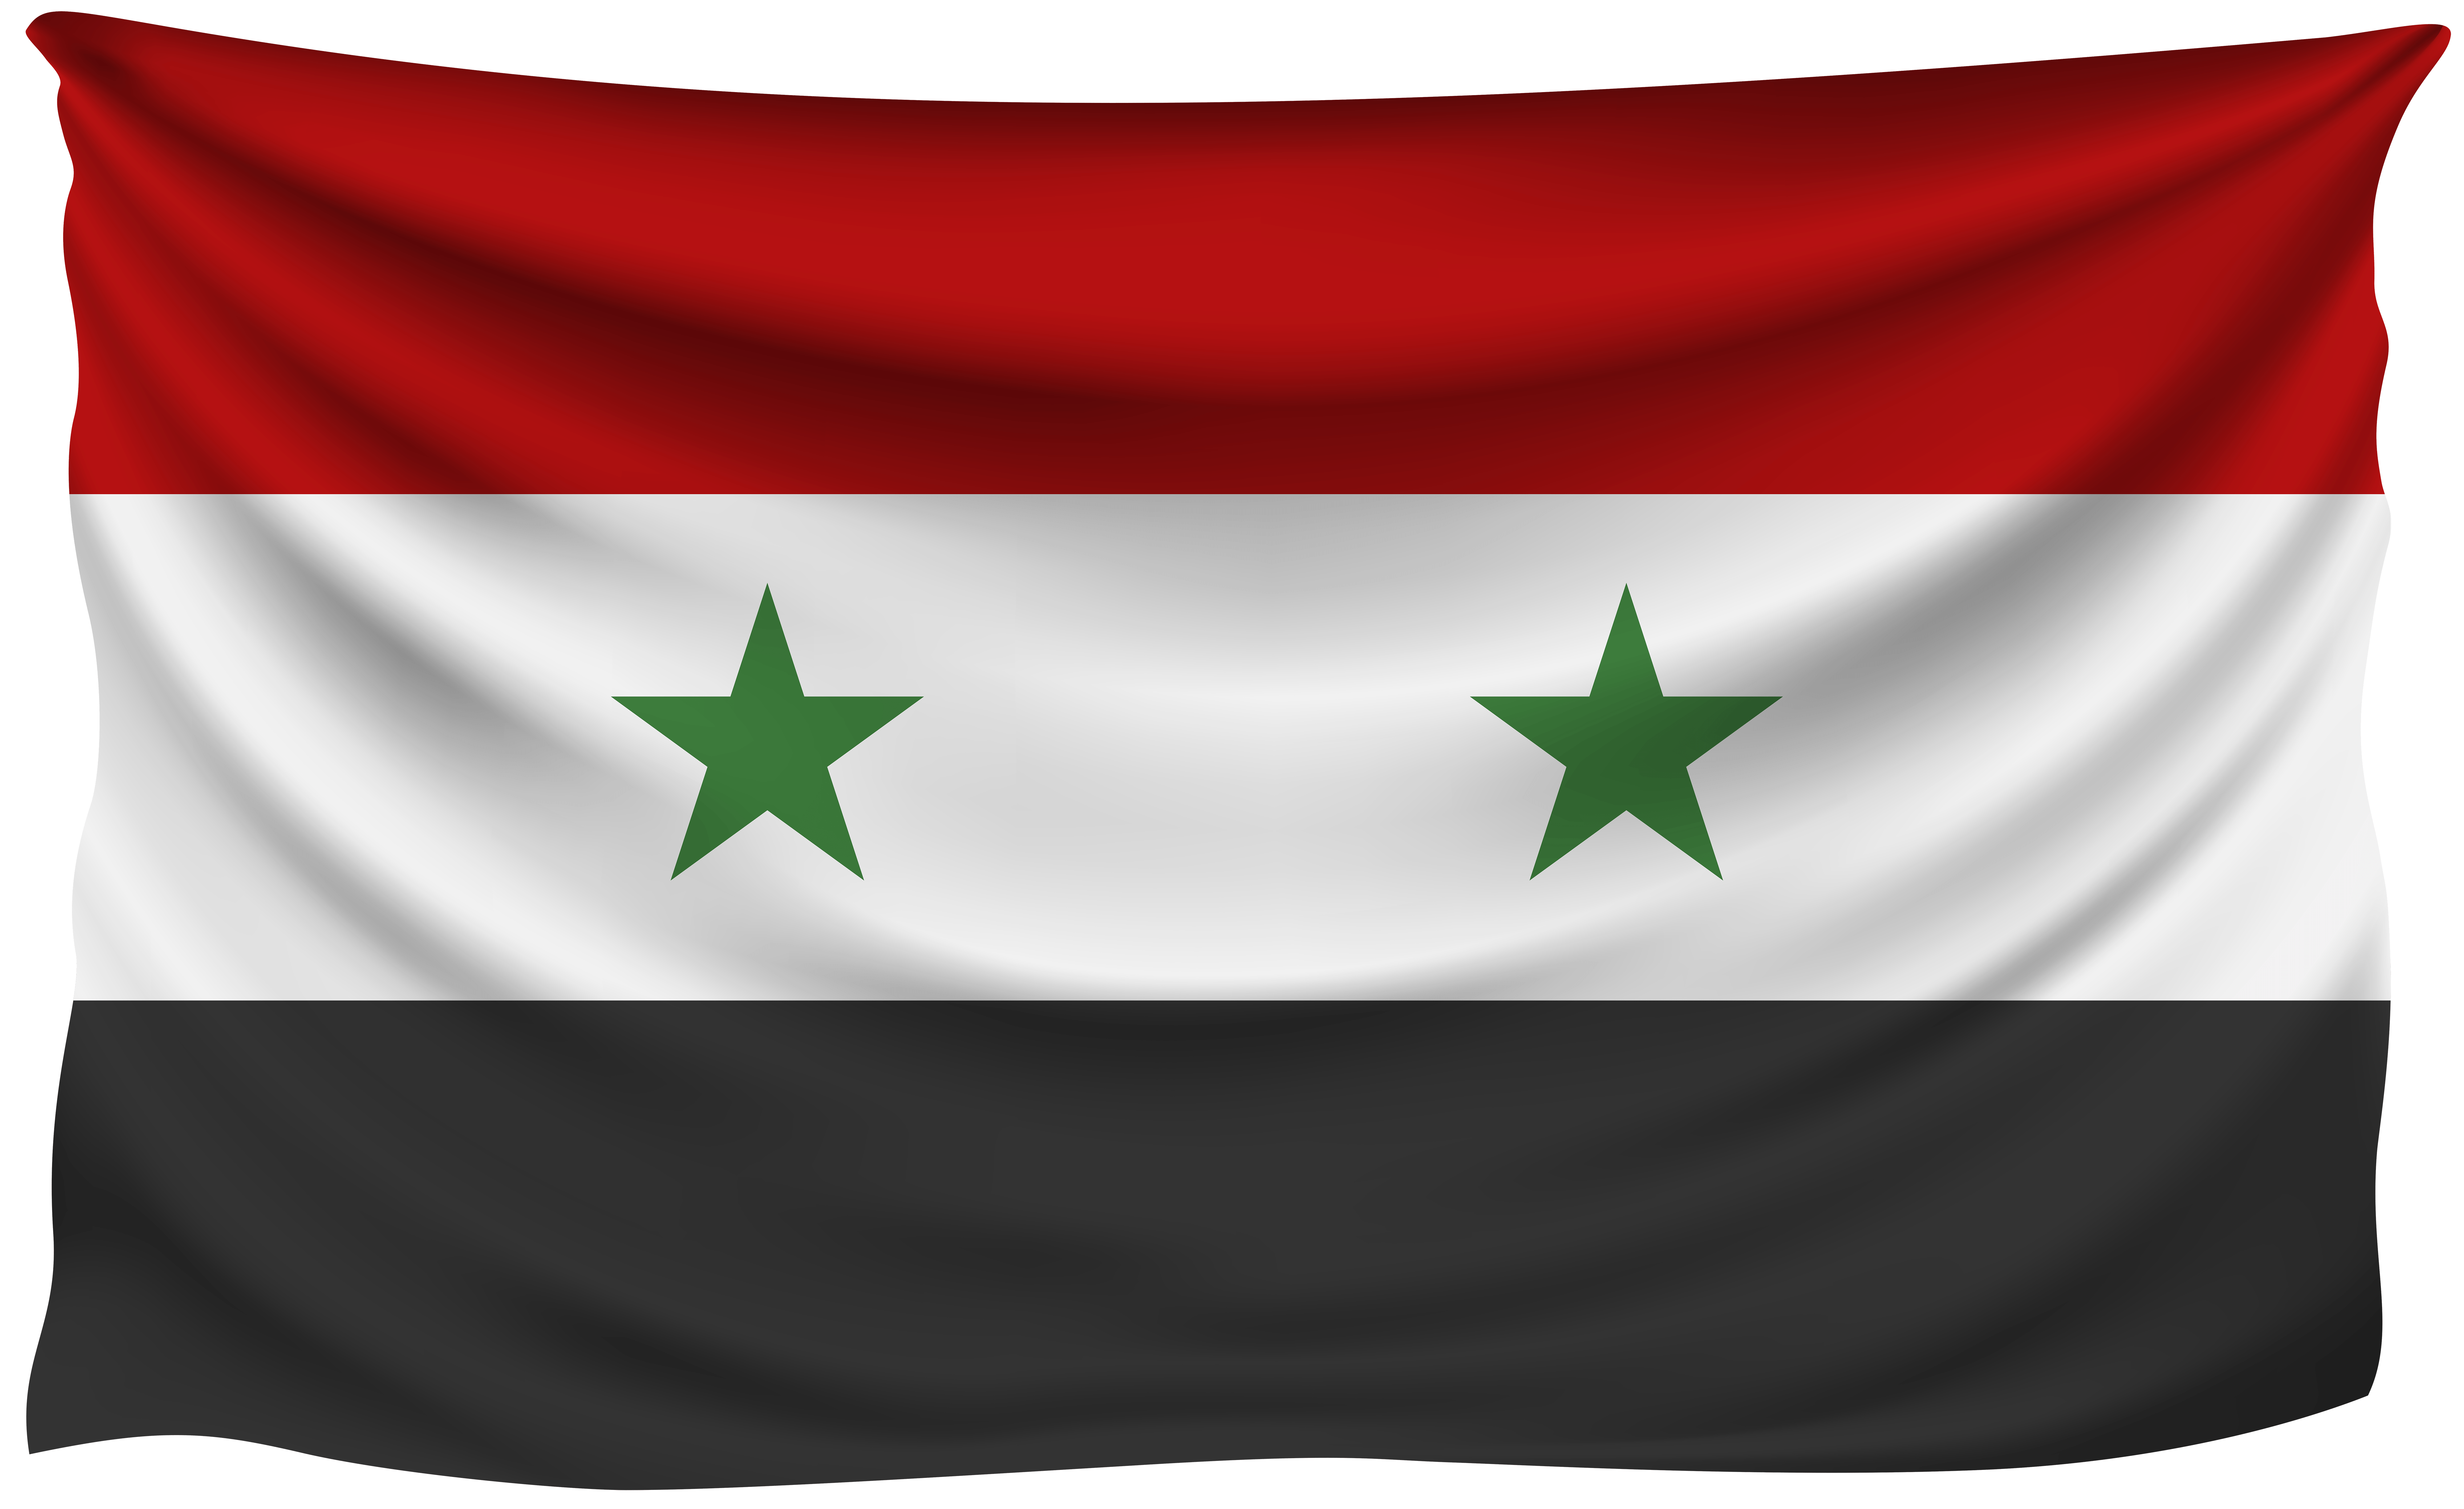 Syria Wrinkled Flag Quality Image